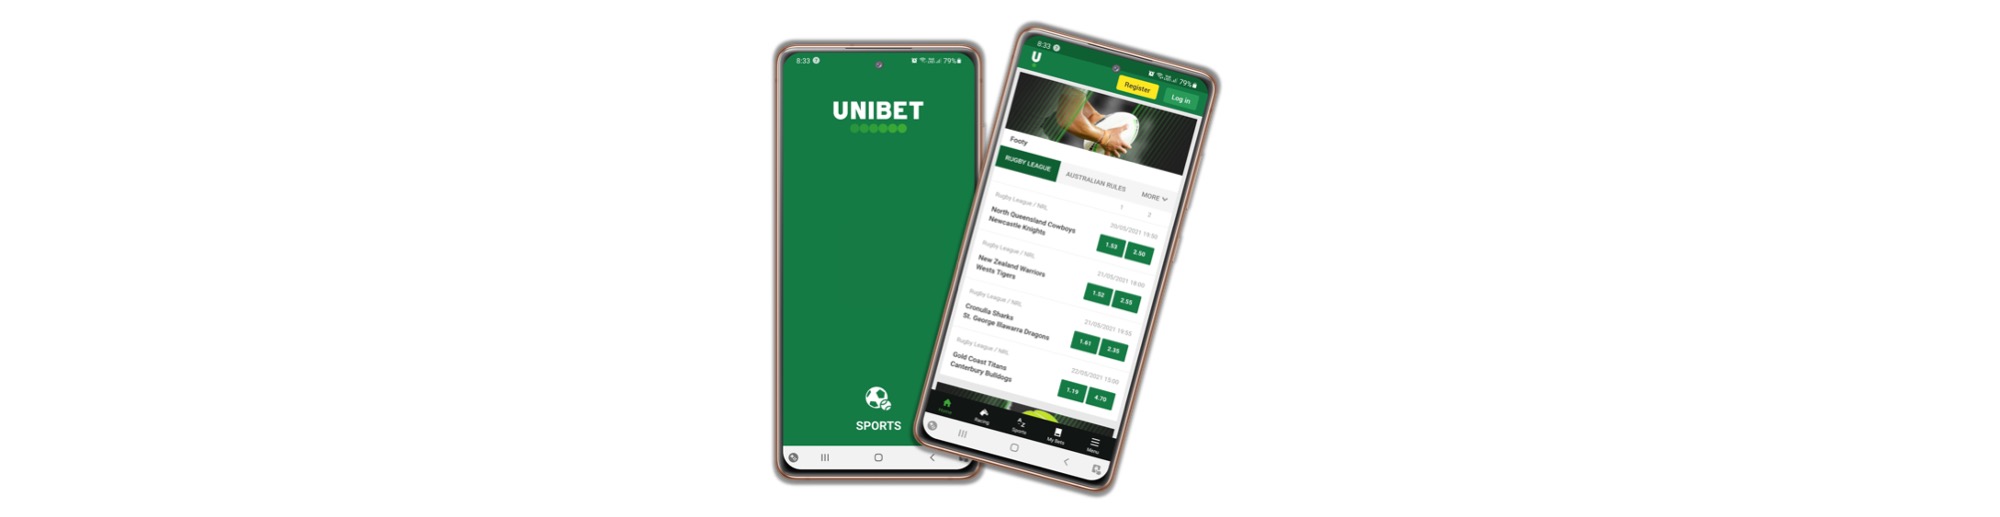 Unibet Phone App